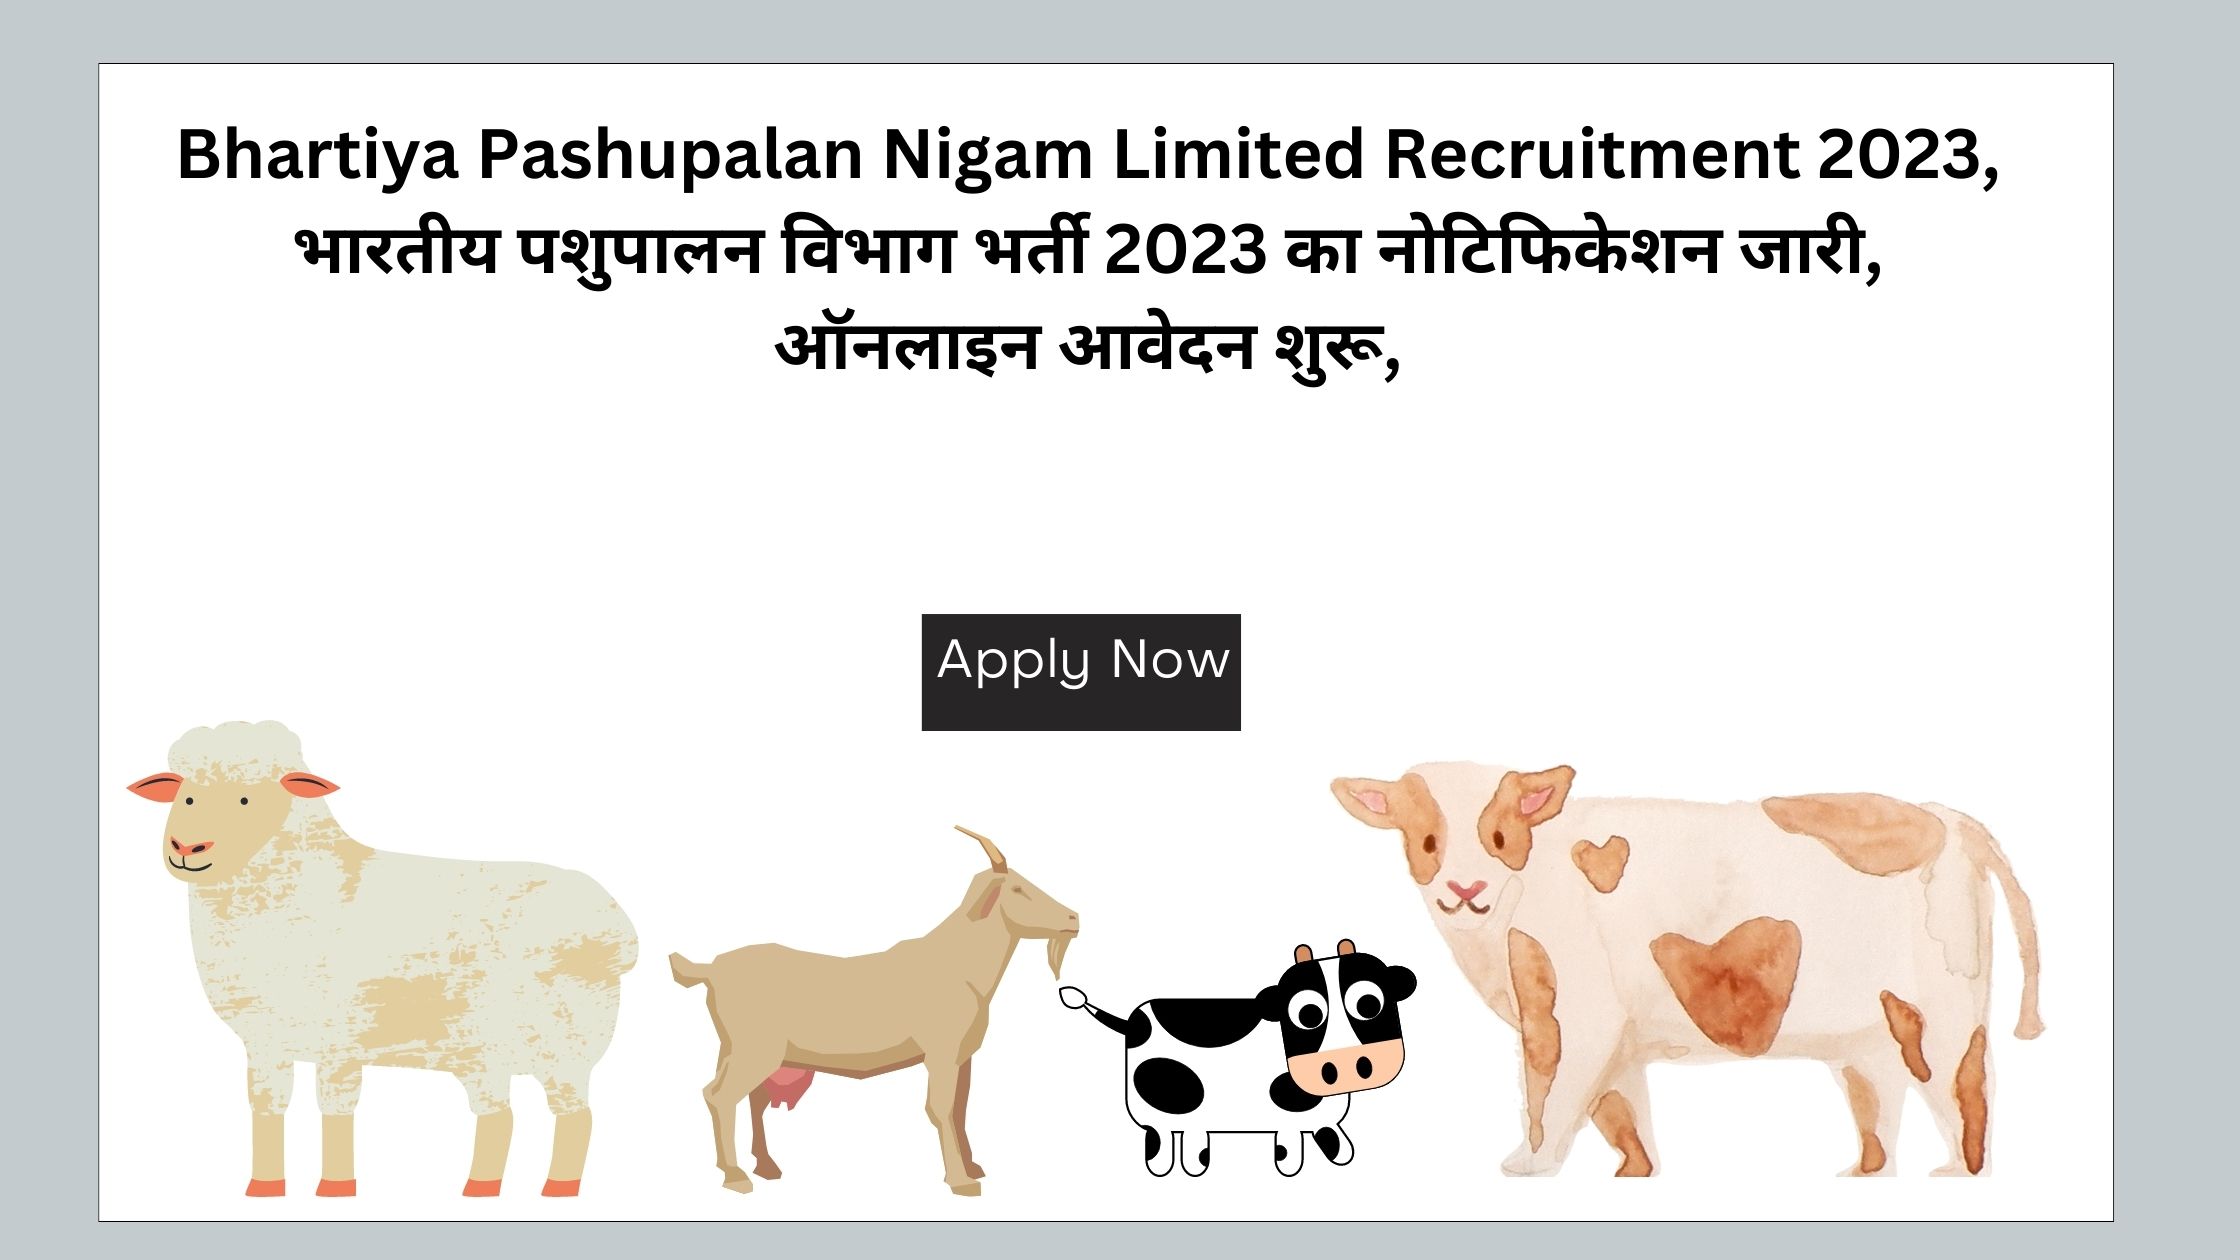 Bhartiya Pashupalan Nigam Limited Recruitment 2023 Apply Now